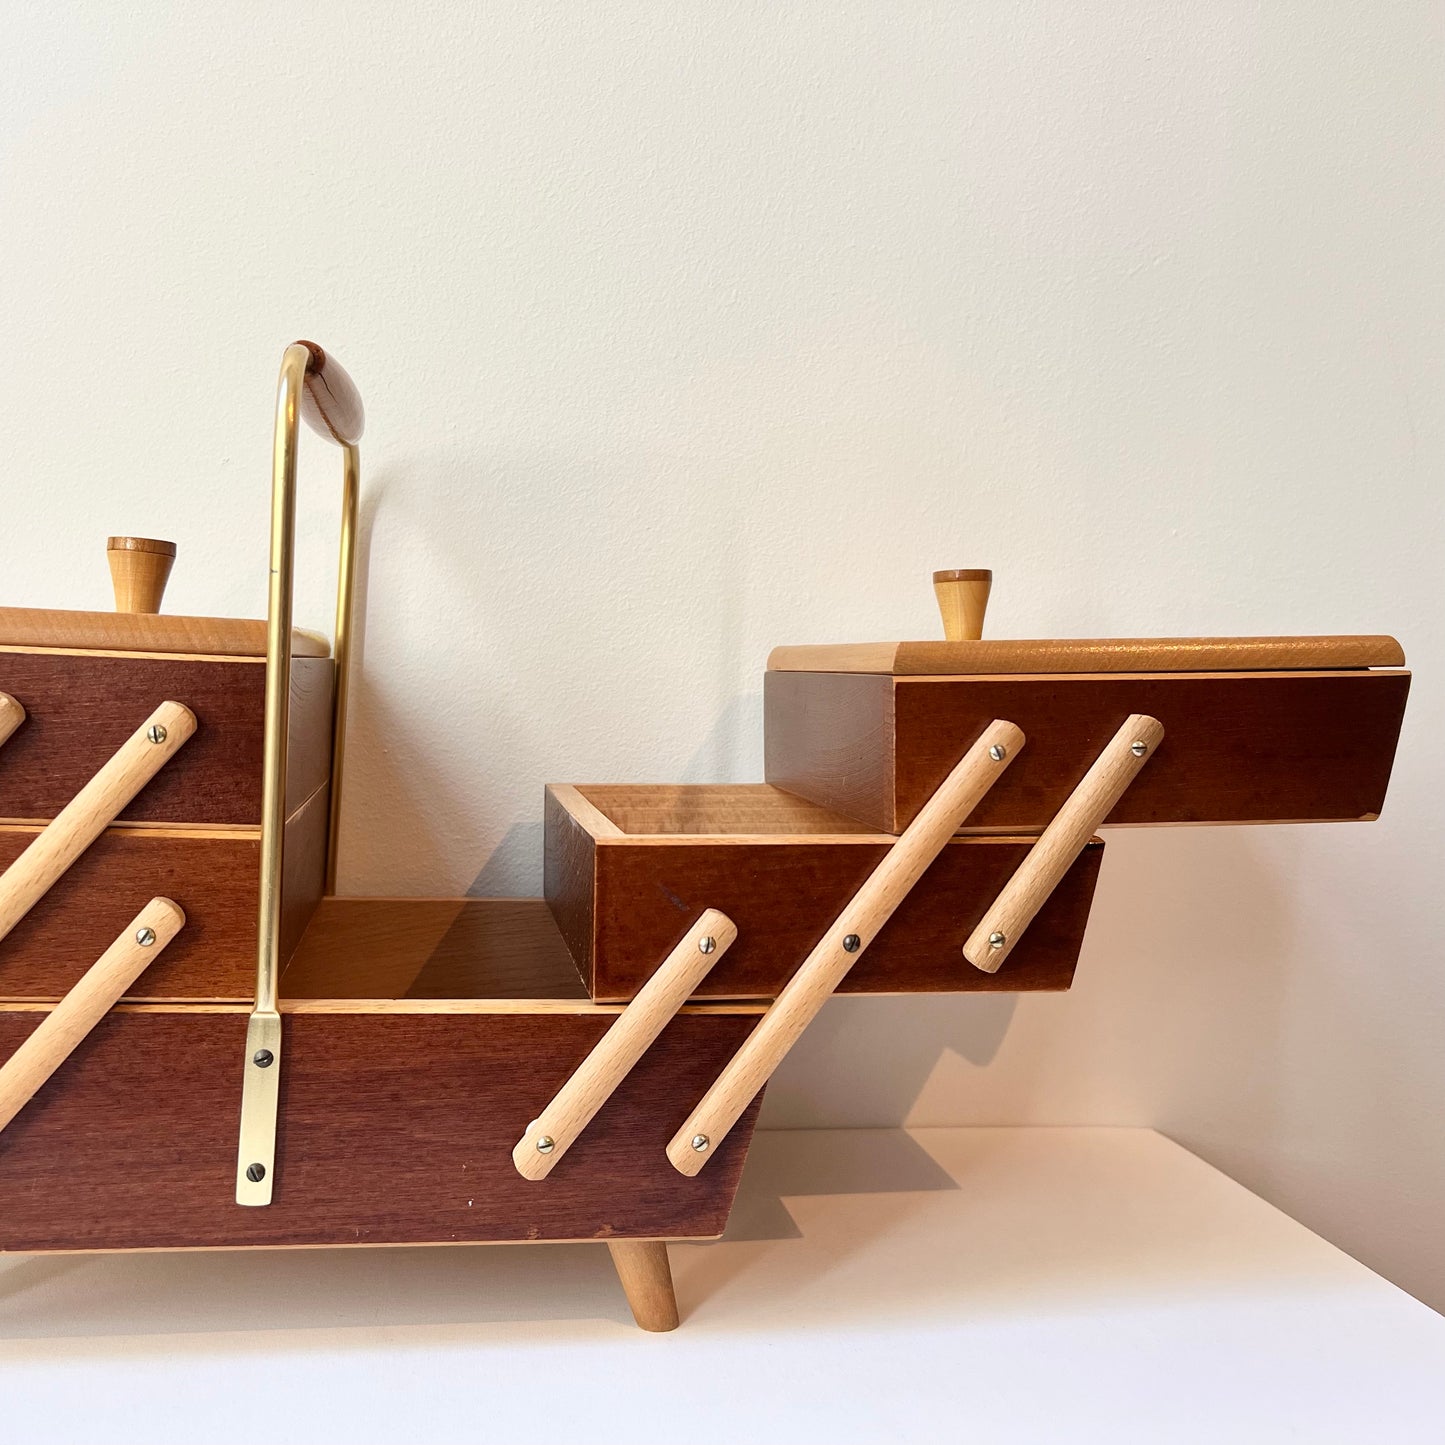 【Vintage】Denmark - 1960s Midcentury Wooden Sewing Box